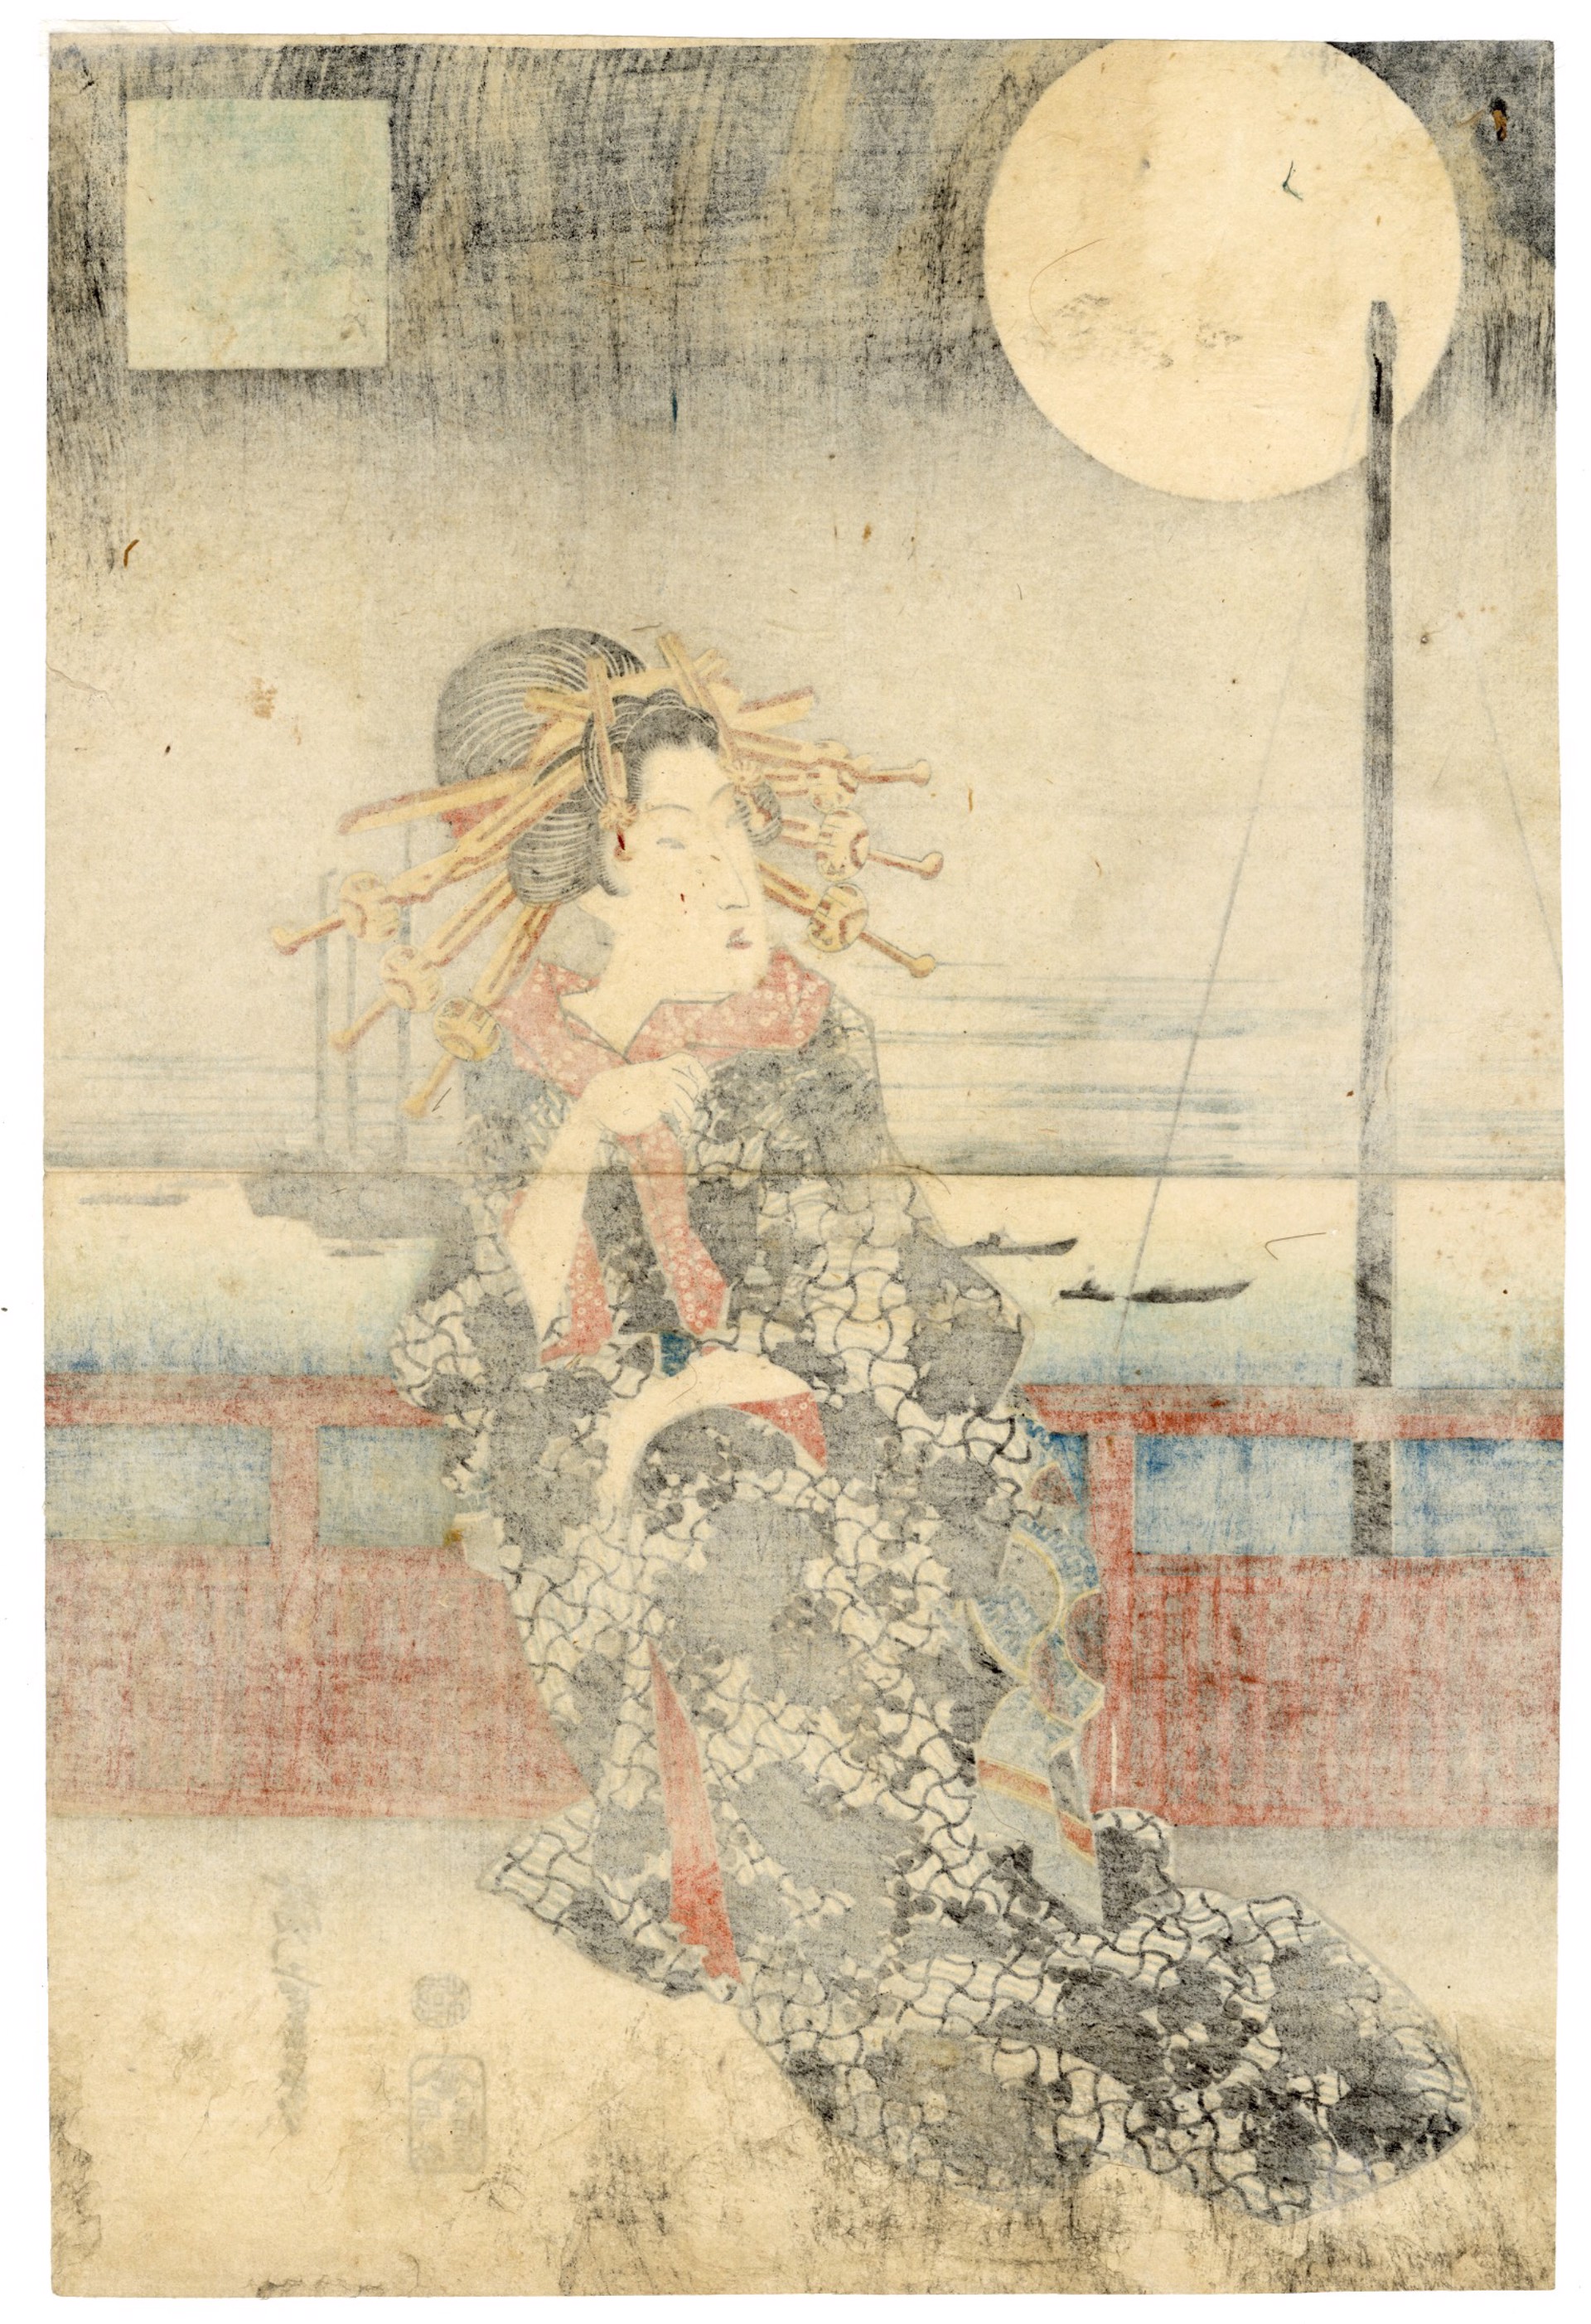 Autumn Moon Party (Aki no Bu, Tsuka no yu) by Hiroshige